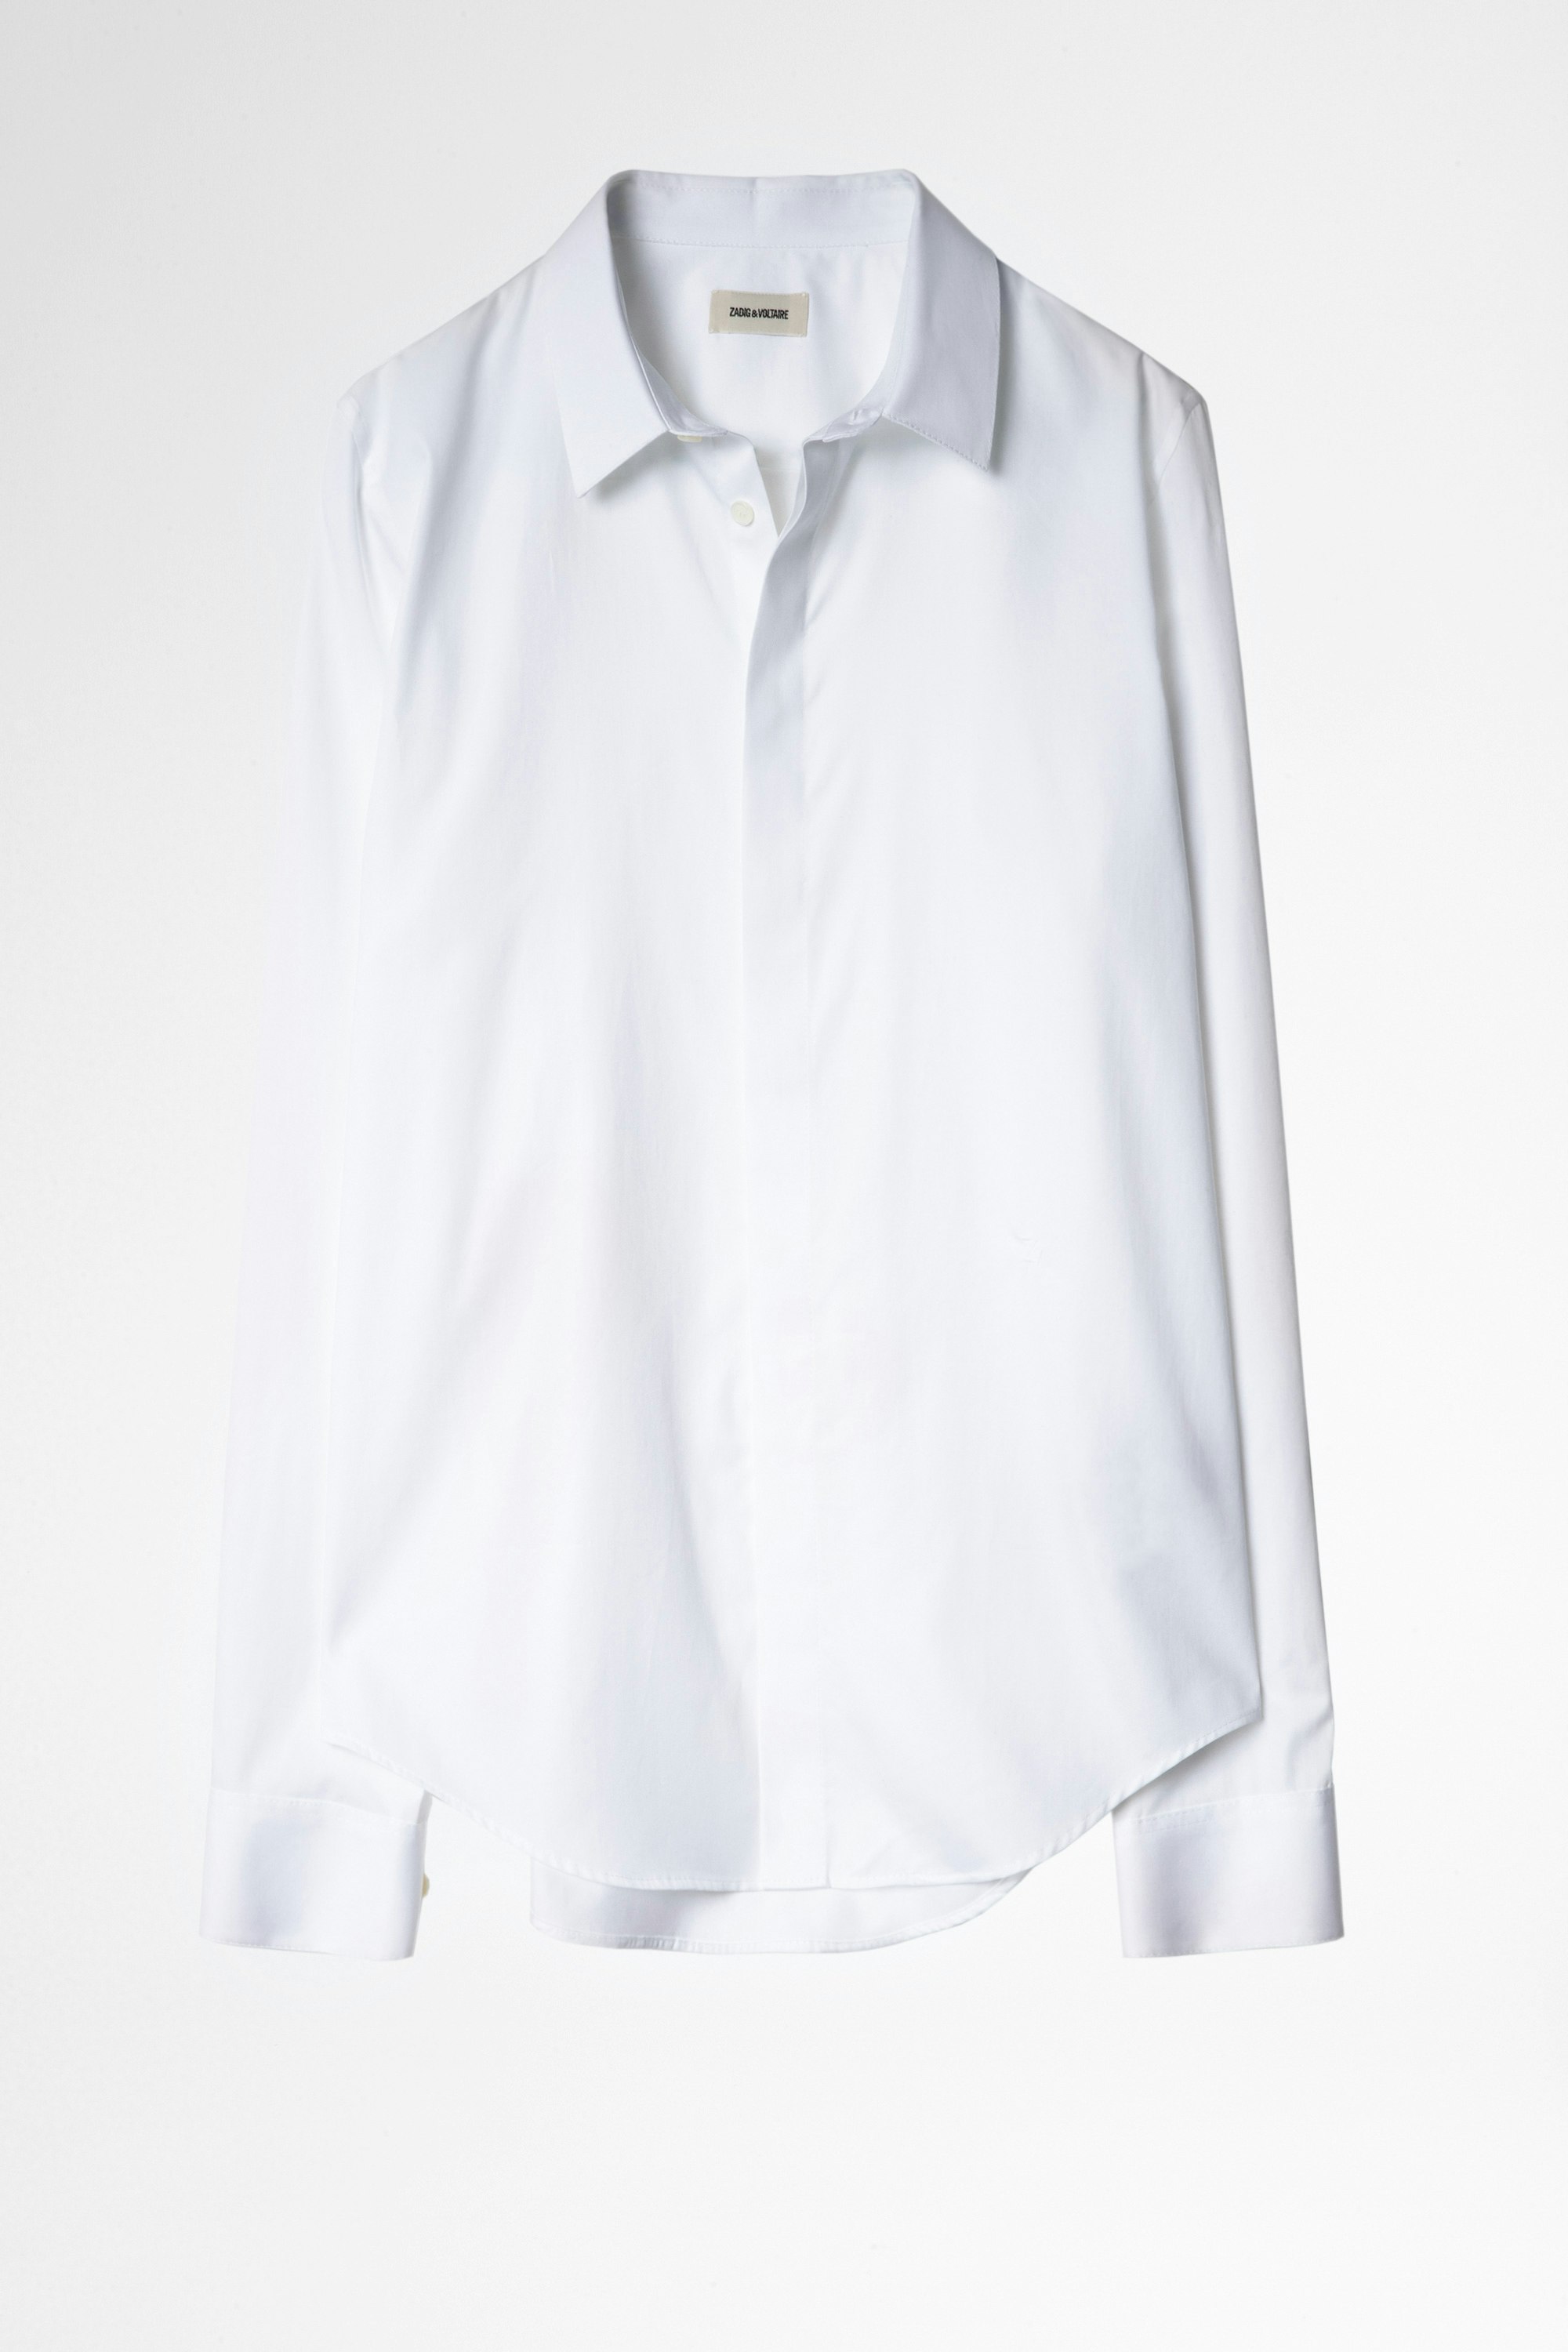 Sydney Pop Shirt Men’s white cotton shirt